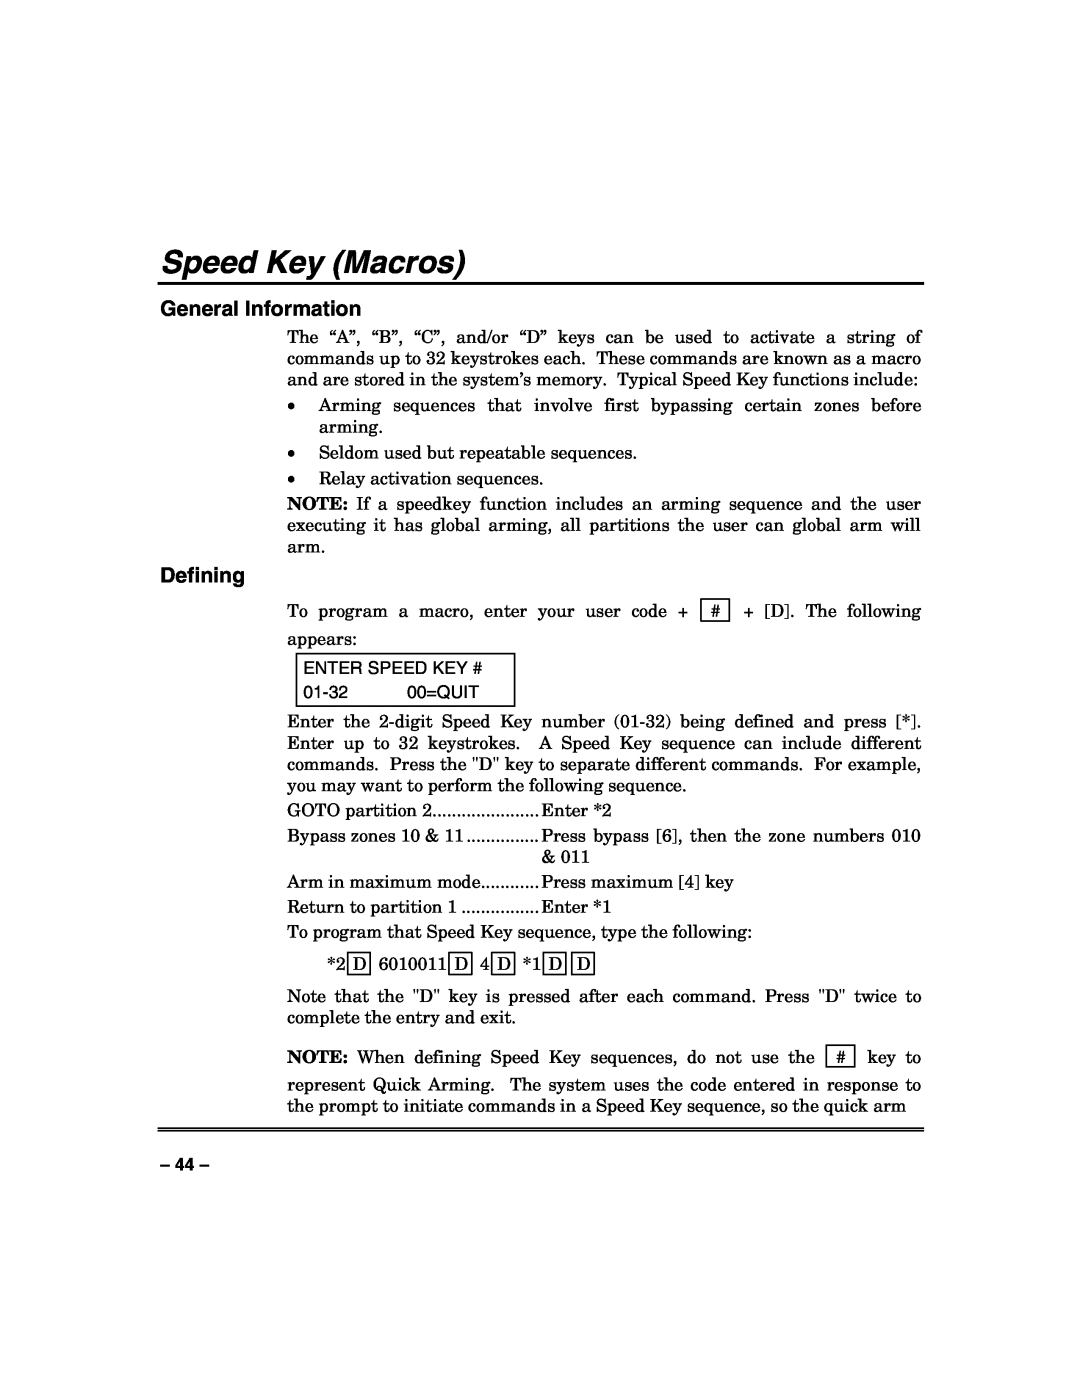 Honeywell 128BPTSIA, VISTA250BPT, VISTA128BPT manual Speed Key Macros, Defining, General Information 